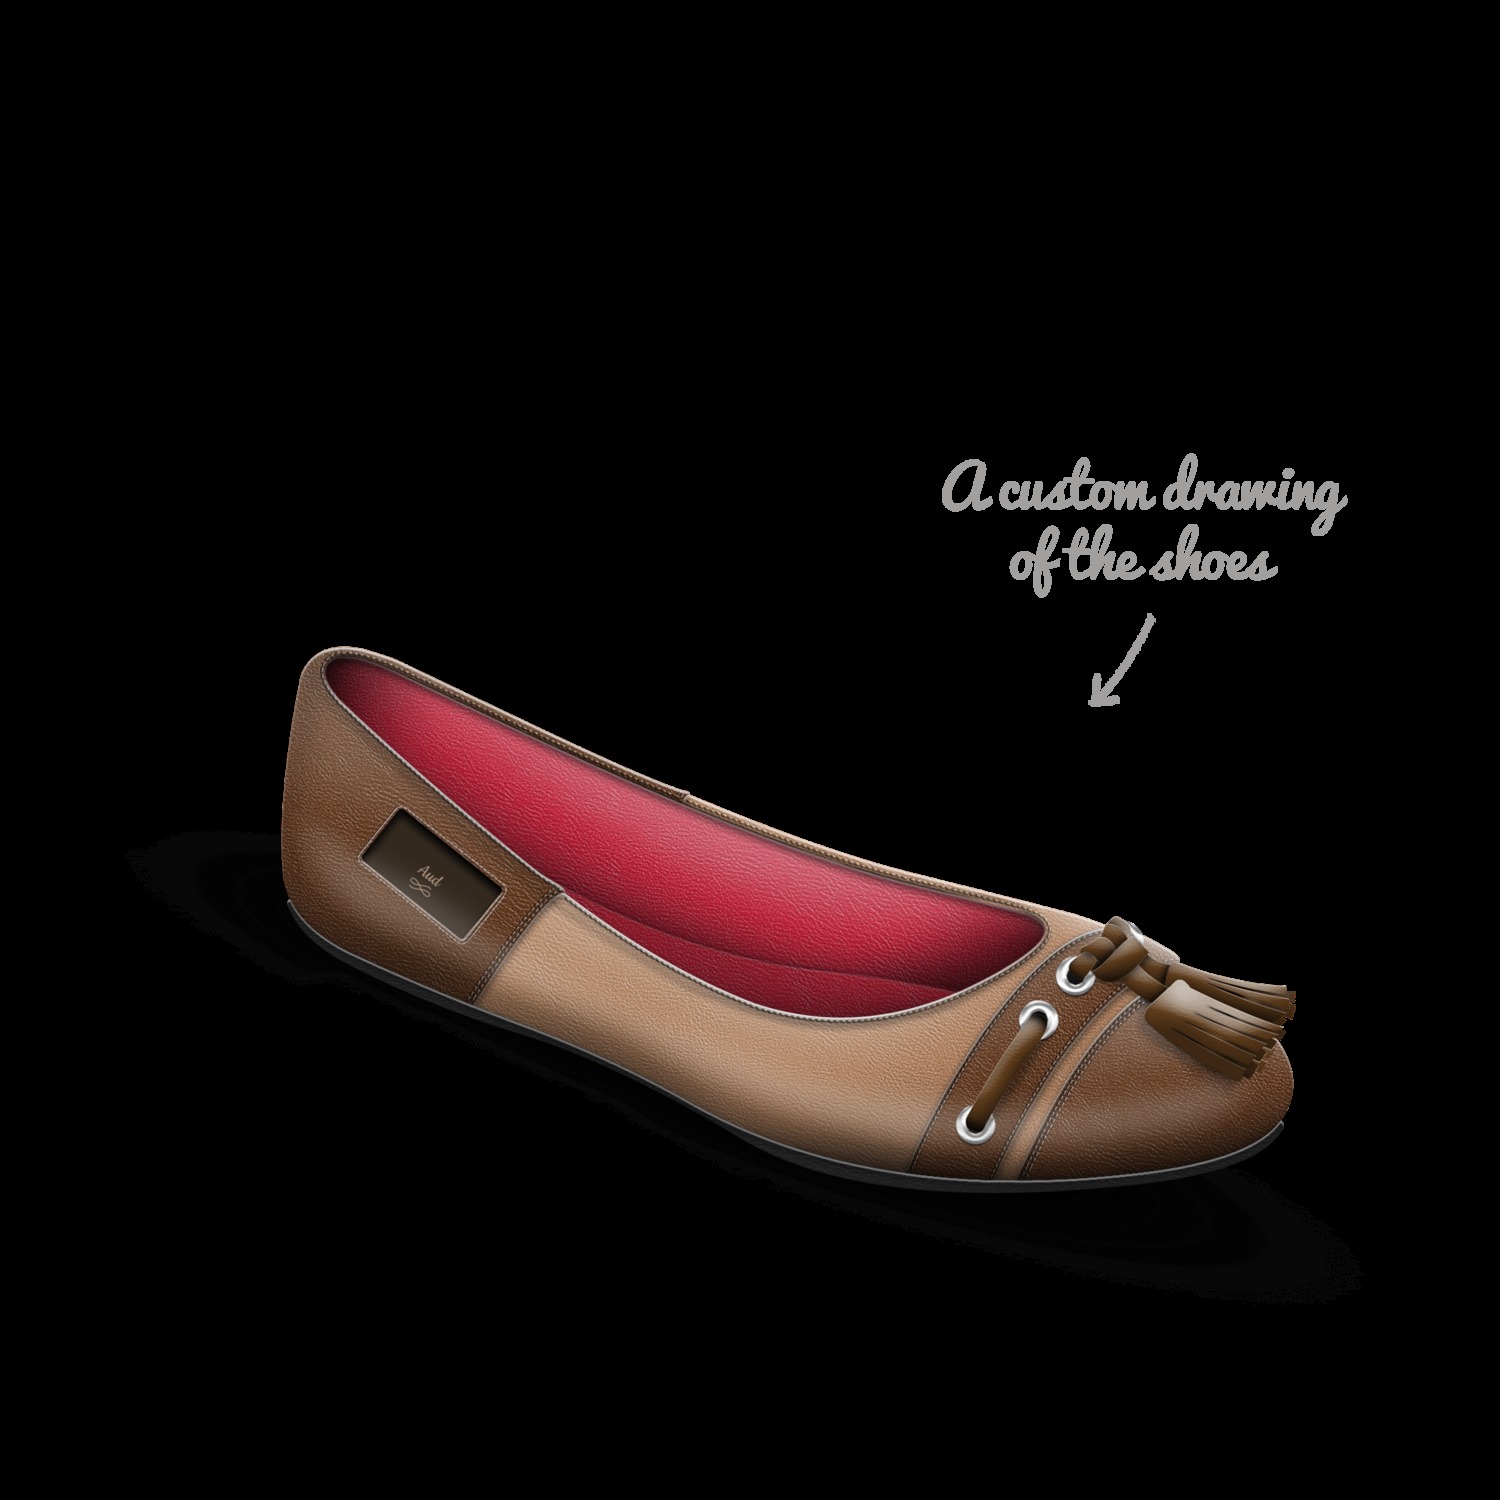 A Custom Shoe concept by Audrey Brooks